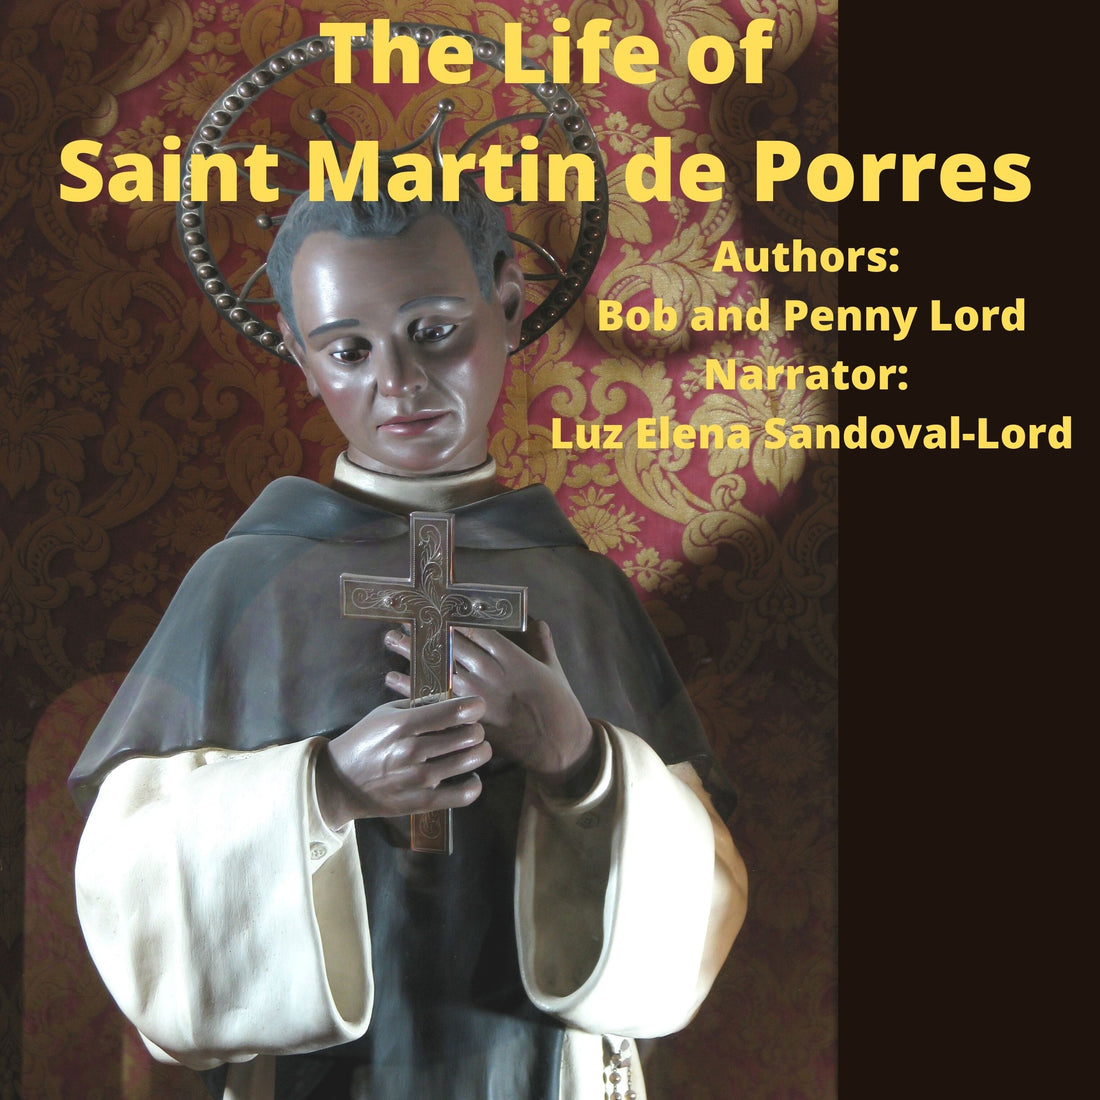 The life of Saint Martin de Porres